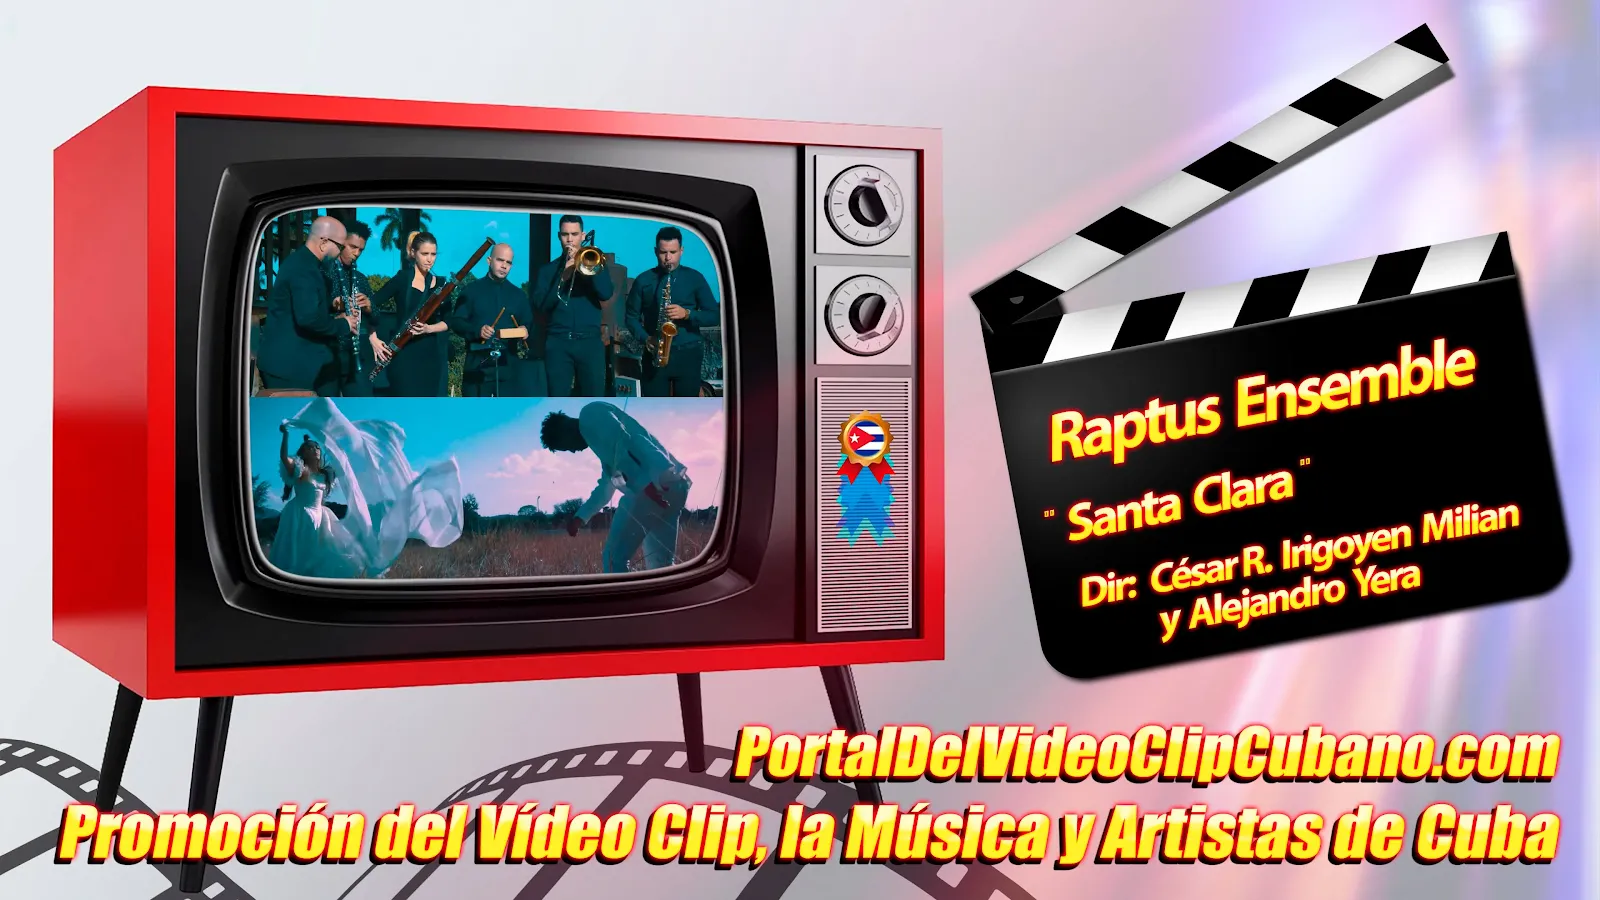 Raptus Ensemble - ¨Santa Clara¨ - Dirección César R. Irigoyen Milian - Alejandro Yera. Portal Del Vídeo Clip Cubano. Música Instrumental Cubana. CUBA.